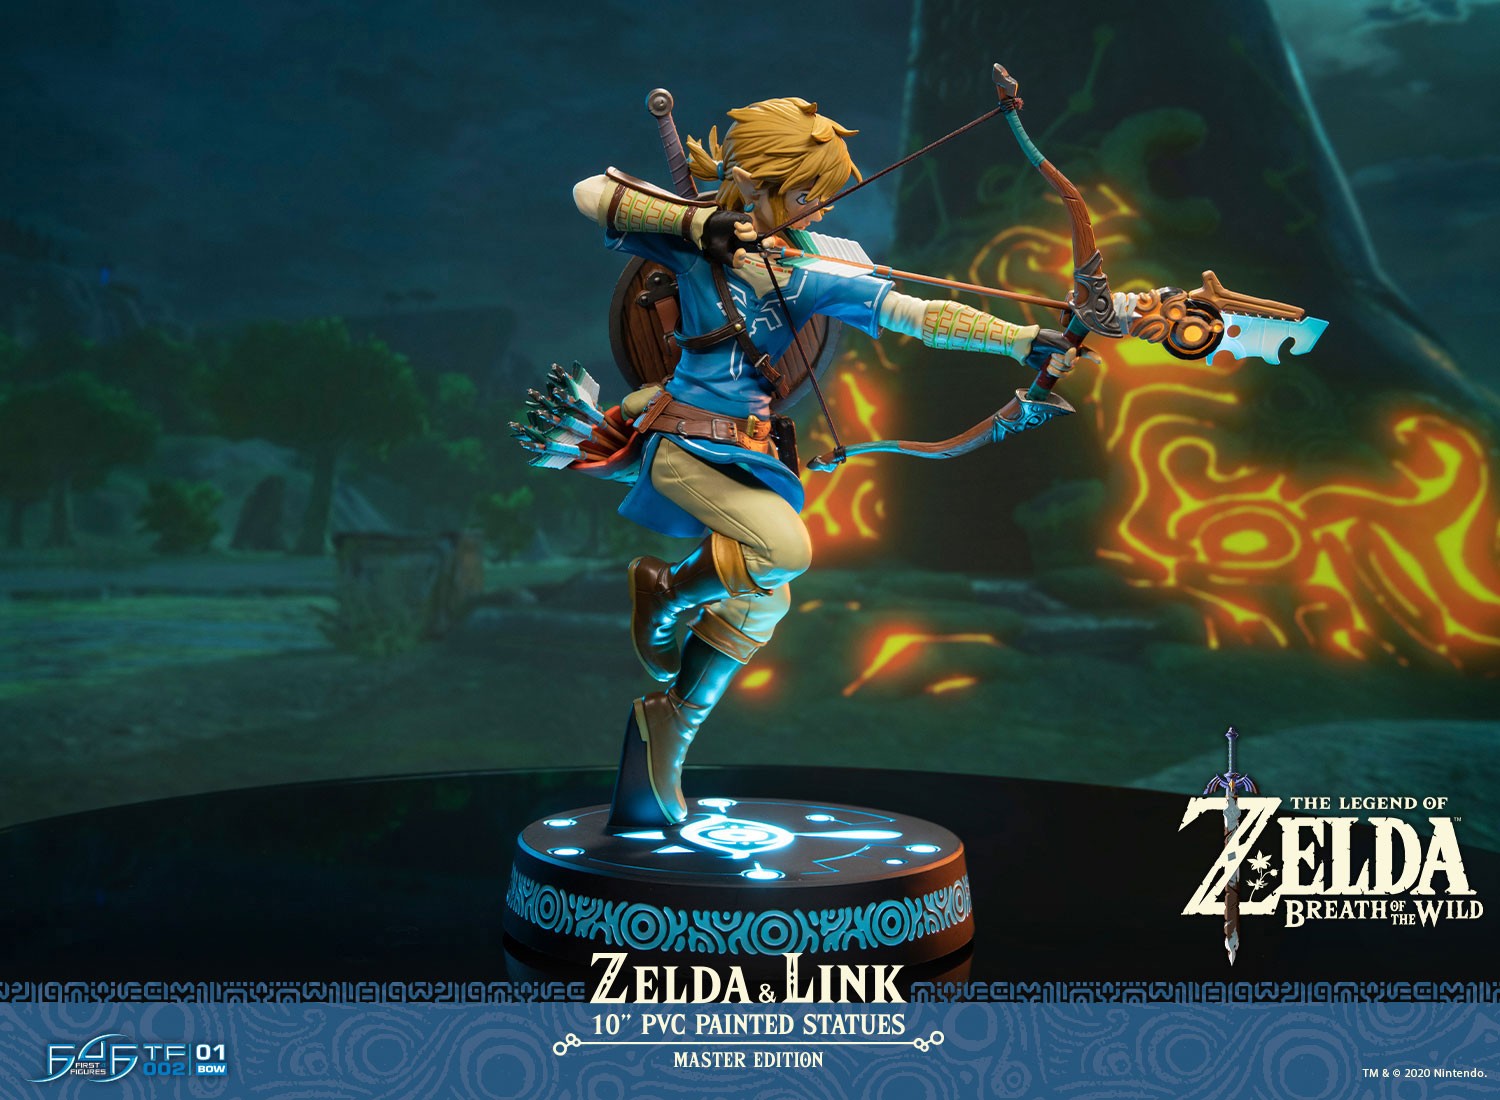 The Legend of Zelda Breath of the Wild Link 4 inch Action Figure